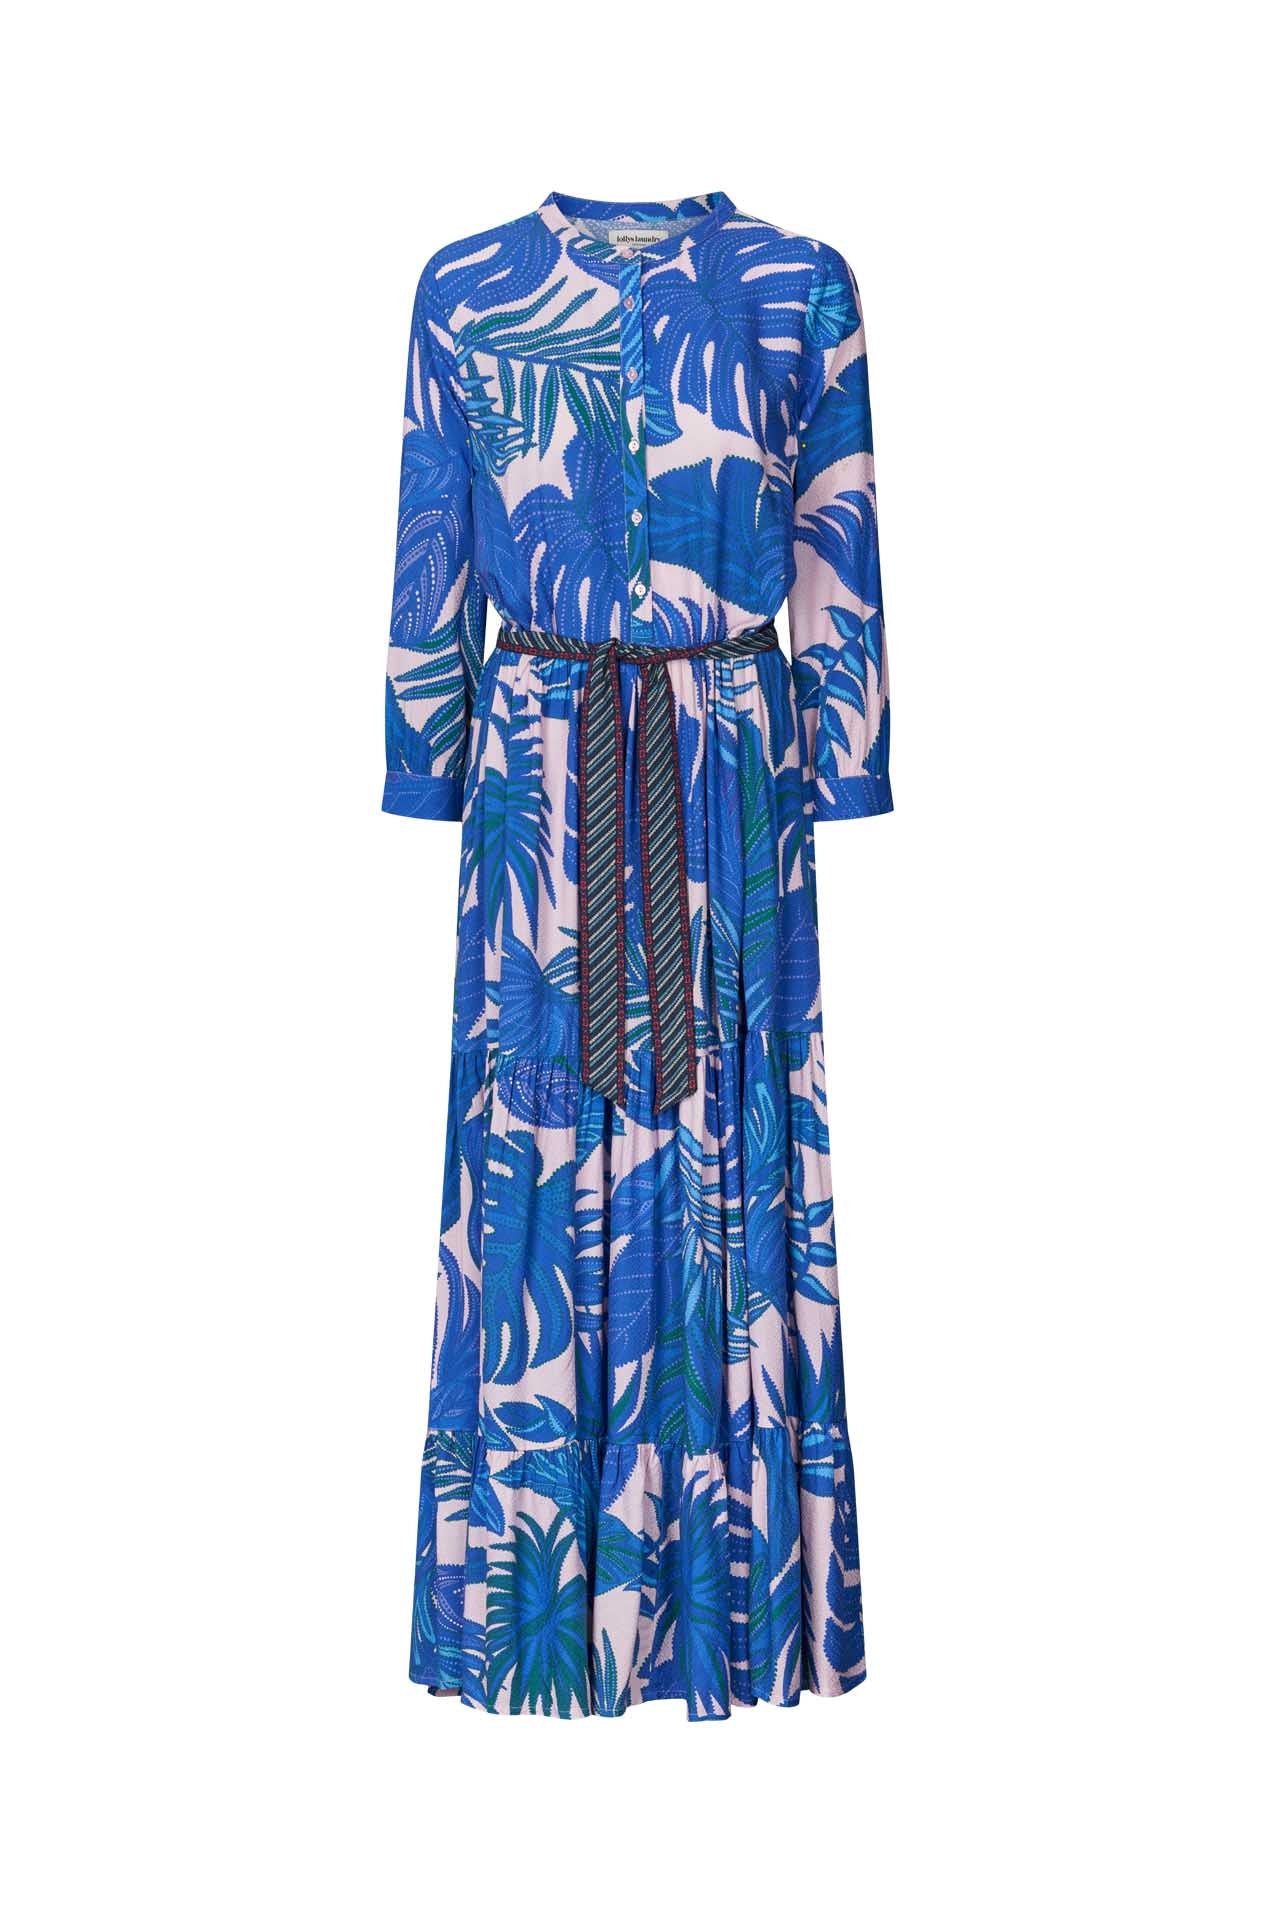 Lollys Laundry Nee Dress Dress 20 Blue